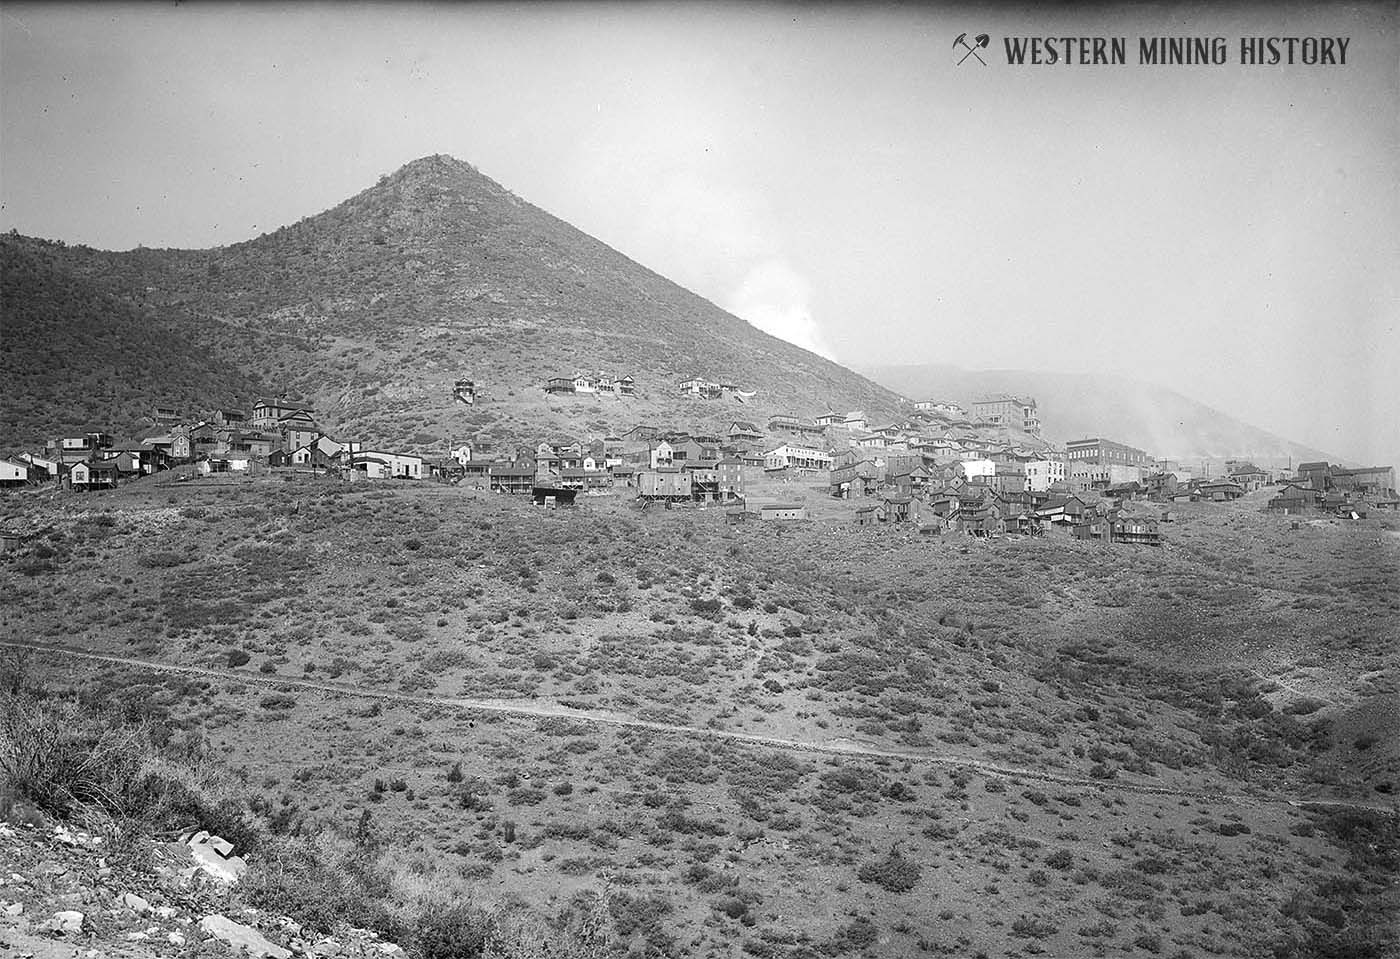 View of Jerome, Arizona ca. 1900